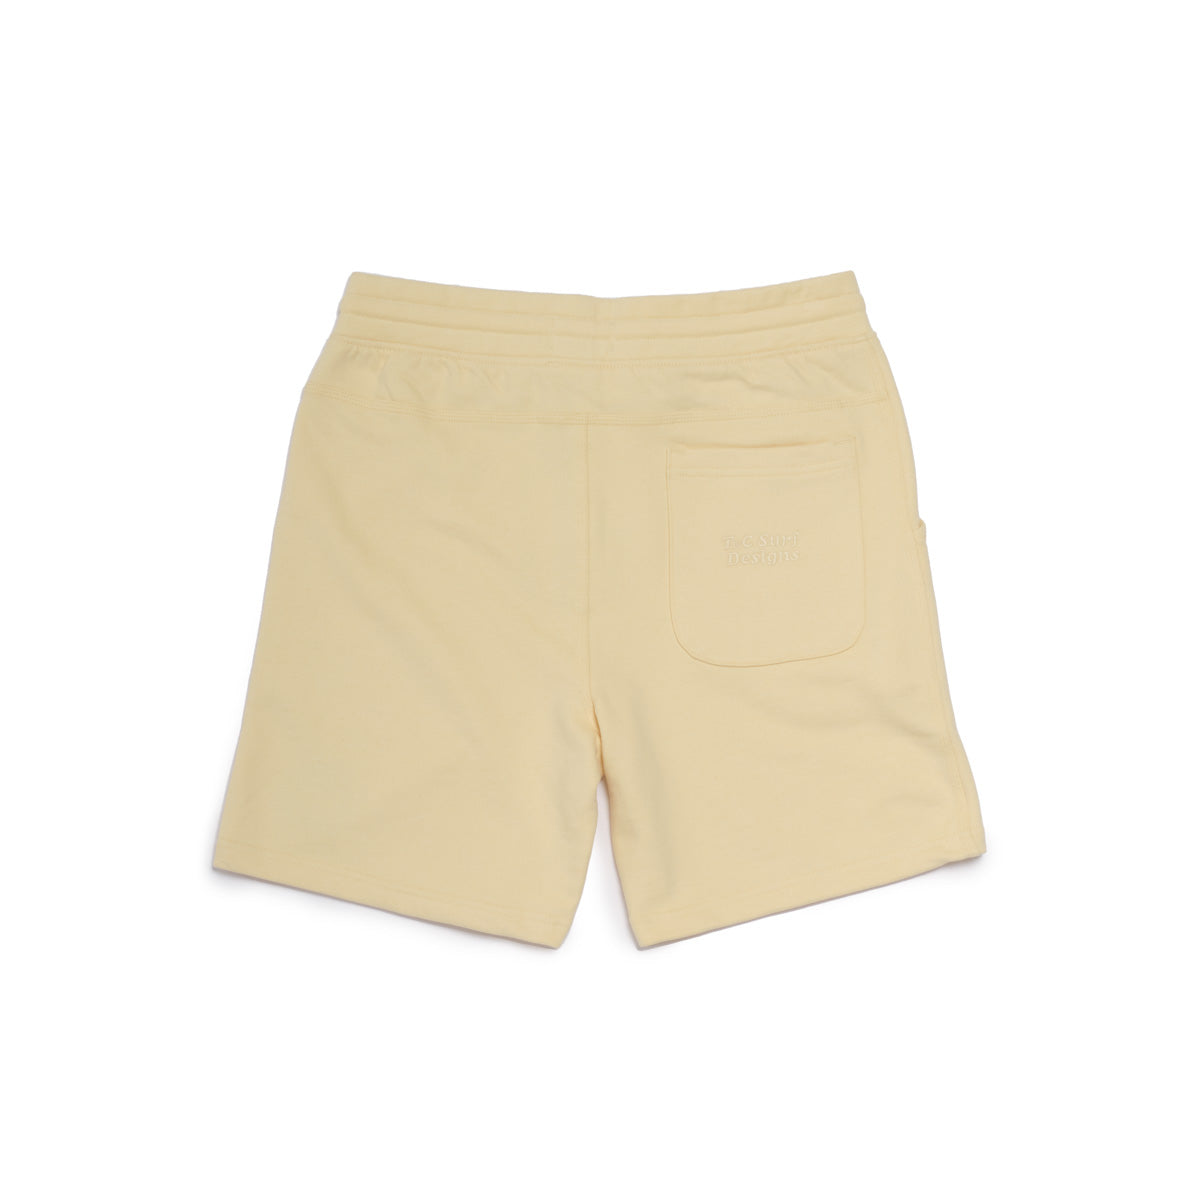 OG Sweat Shorts - Bone Yellow